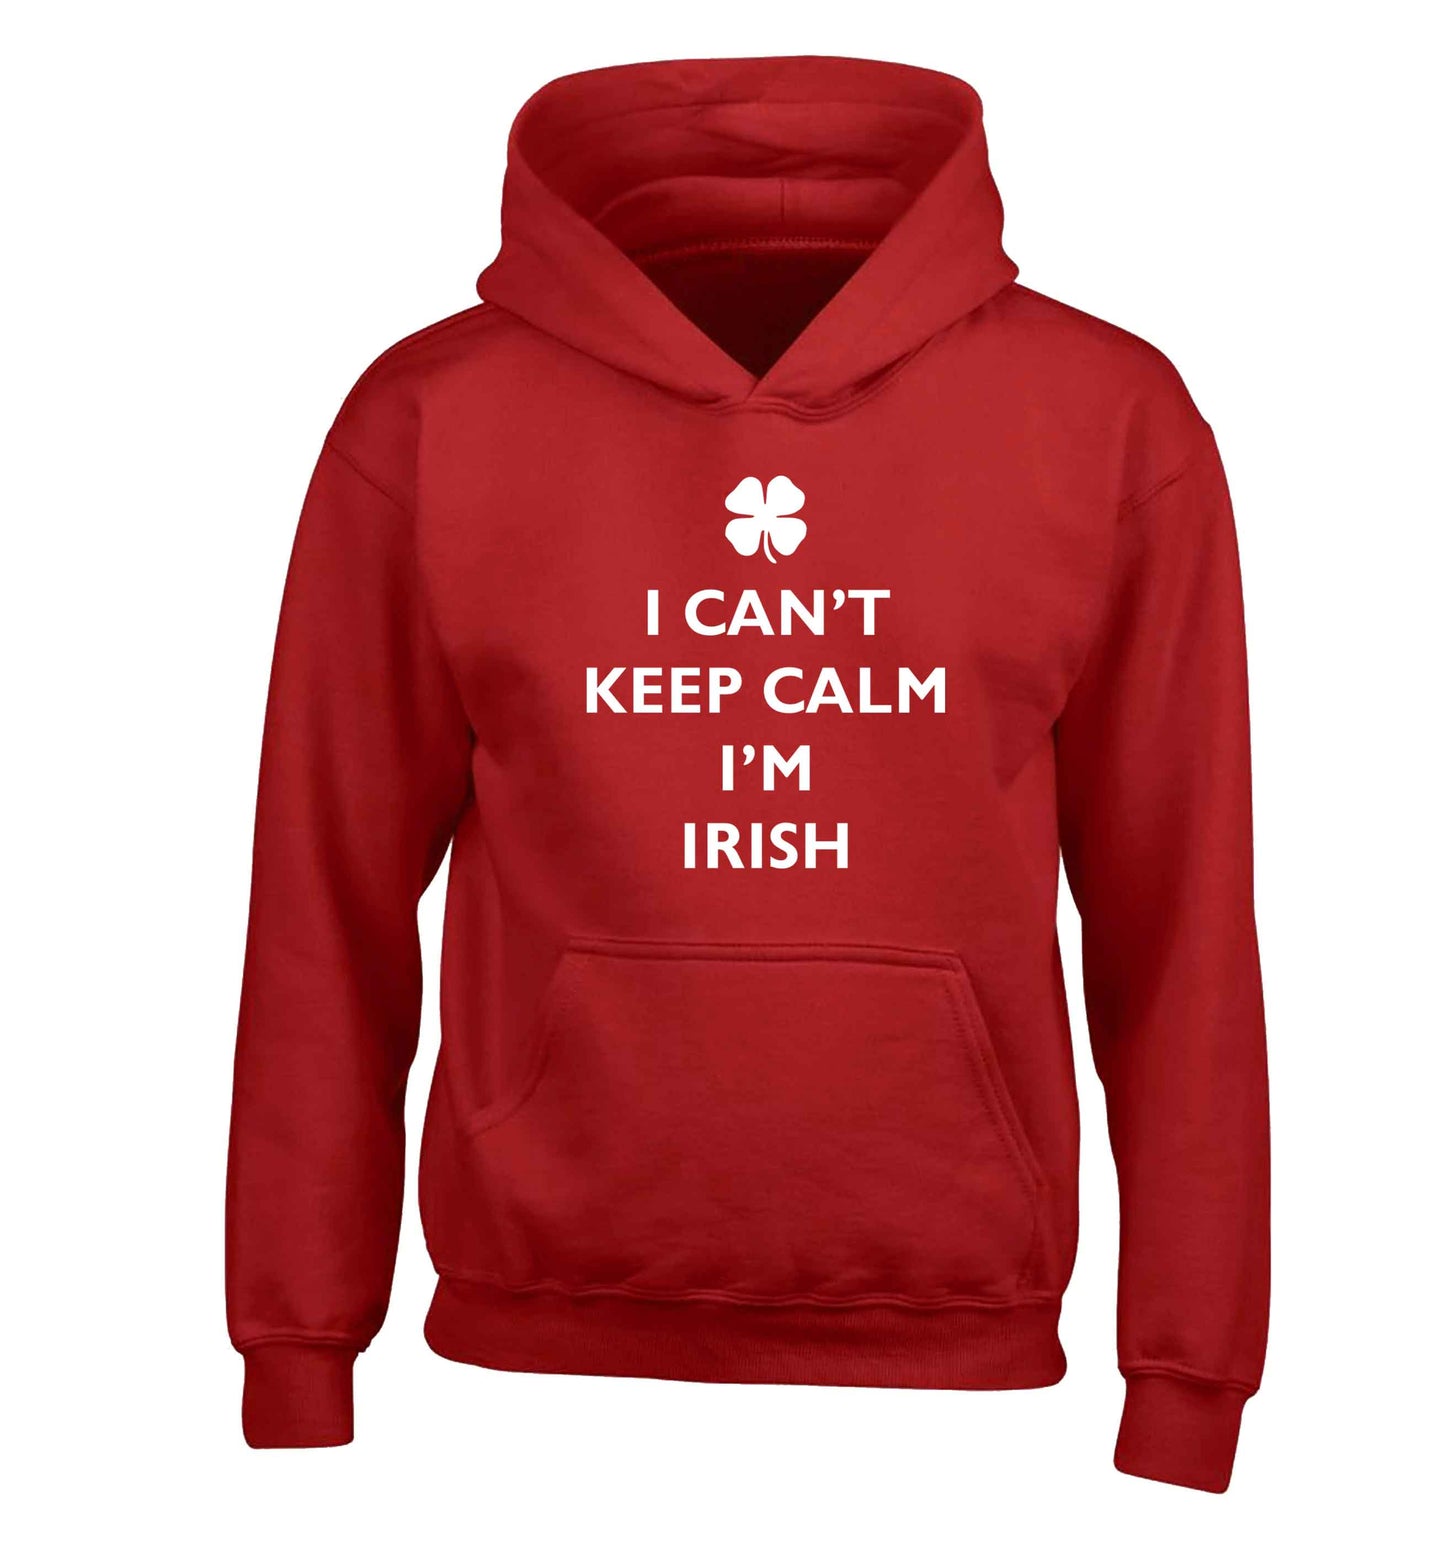 I can't keep calm I'm Irish children's red hoodie 12-13 Years